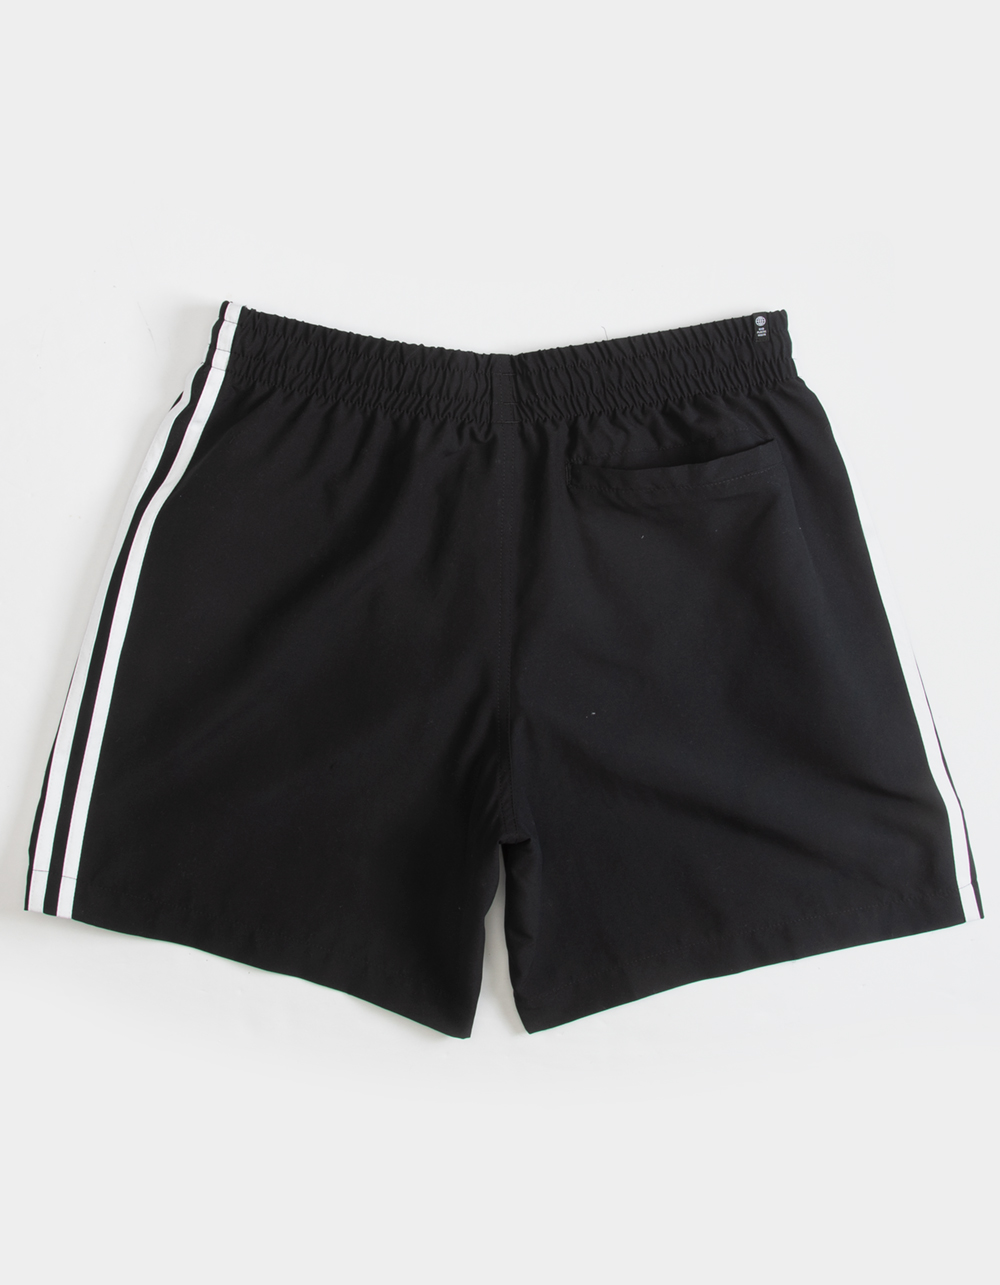 ADIDAS Originals 3-Stripes Mens Swim Shorts - BLACK | Tillys